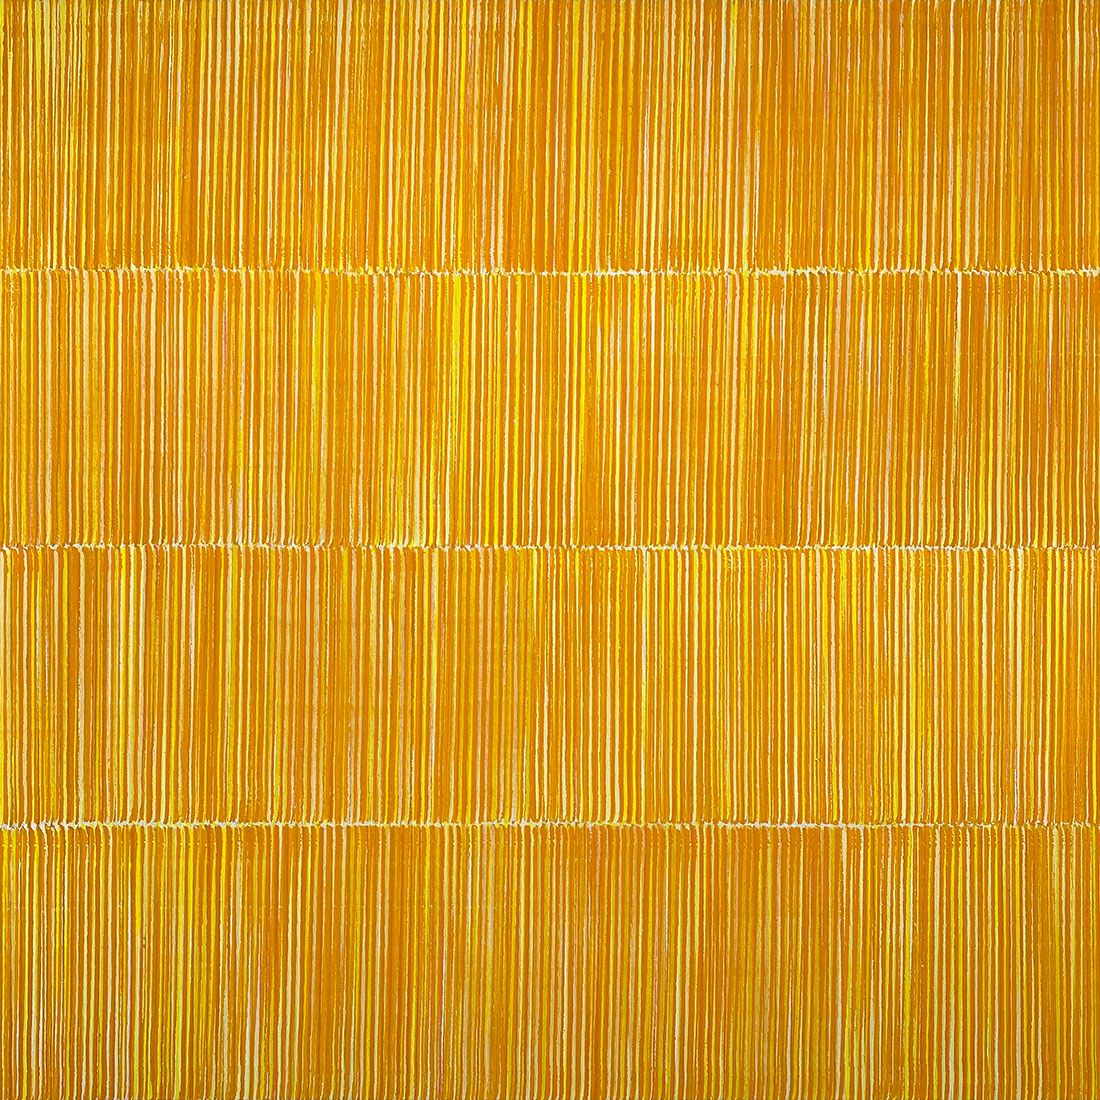 Nikola Dimitrov, FarbKlang Gelb, 2021, Pigmente, Bindemittel auf Leinwand, 80 × 80 cm